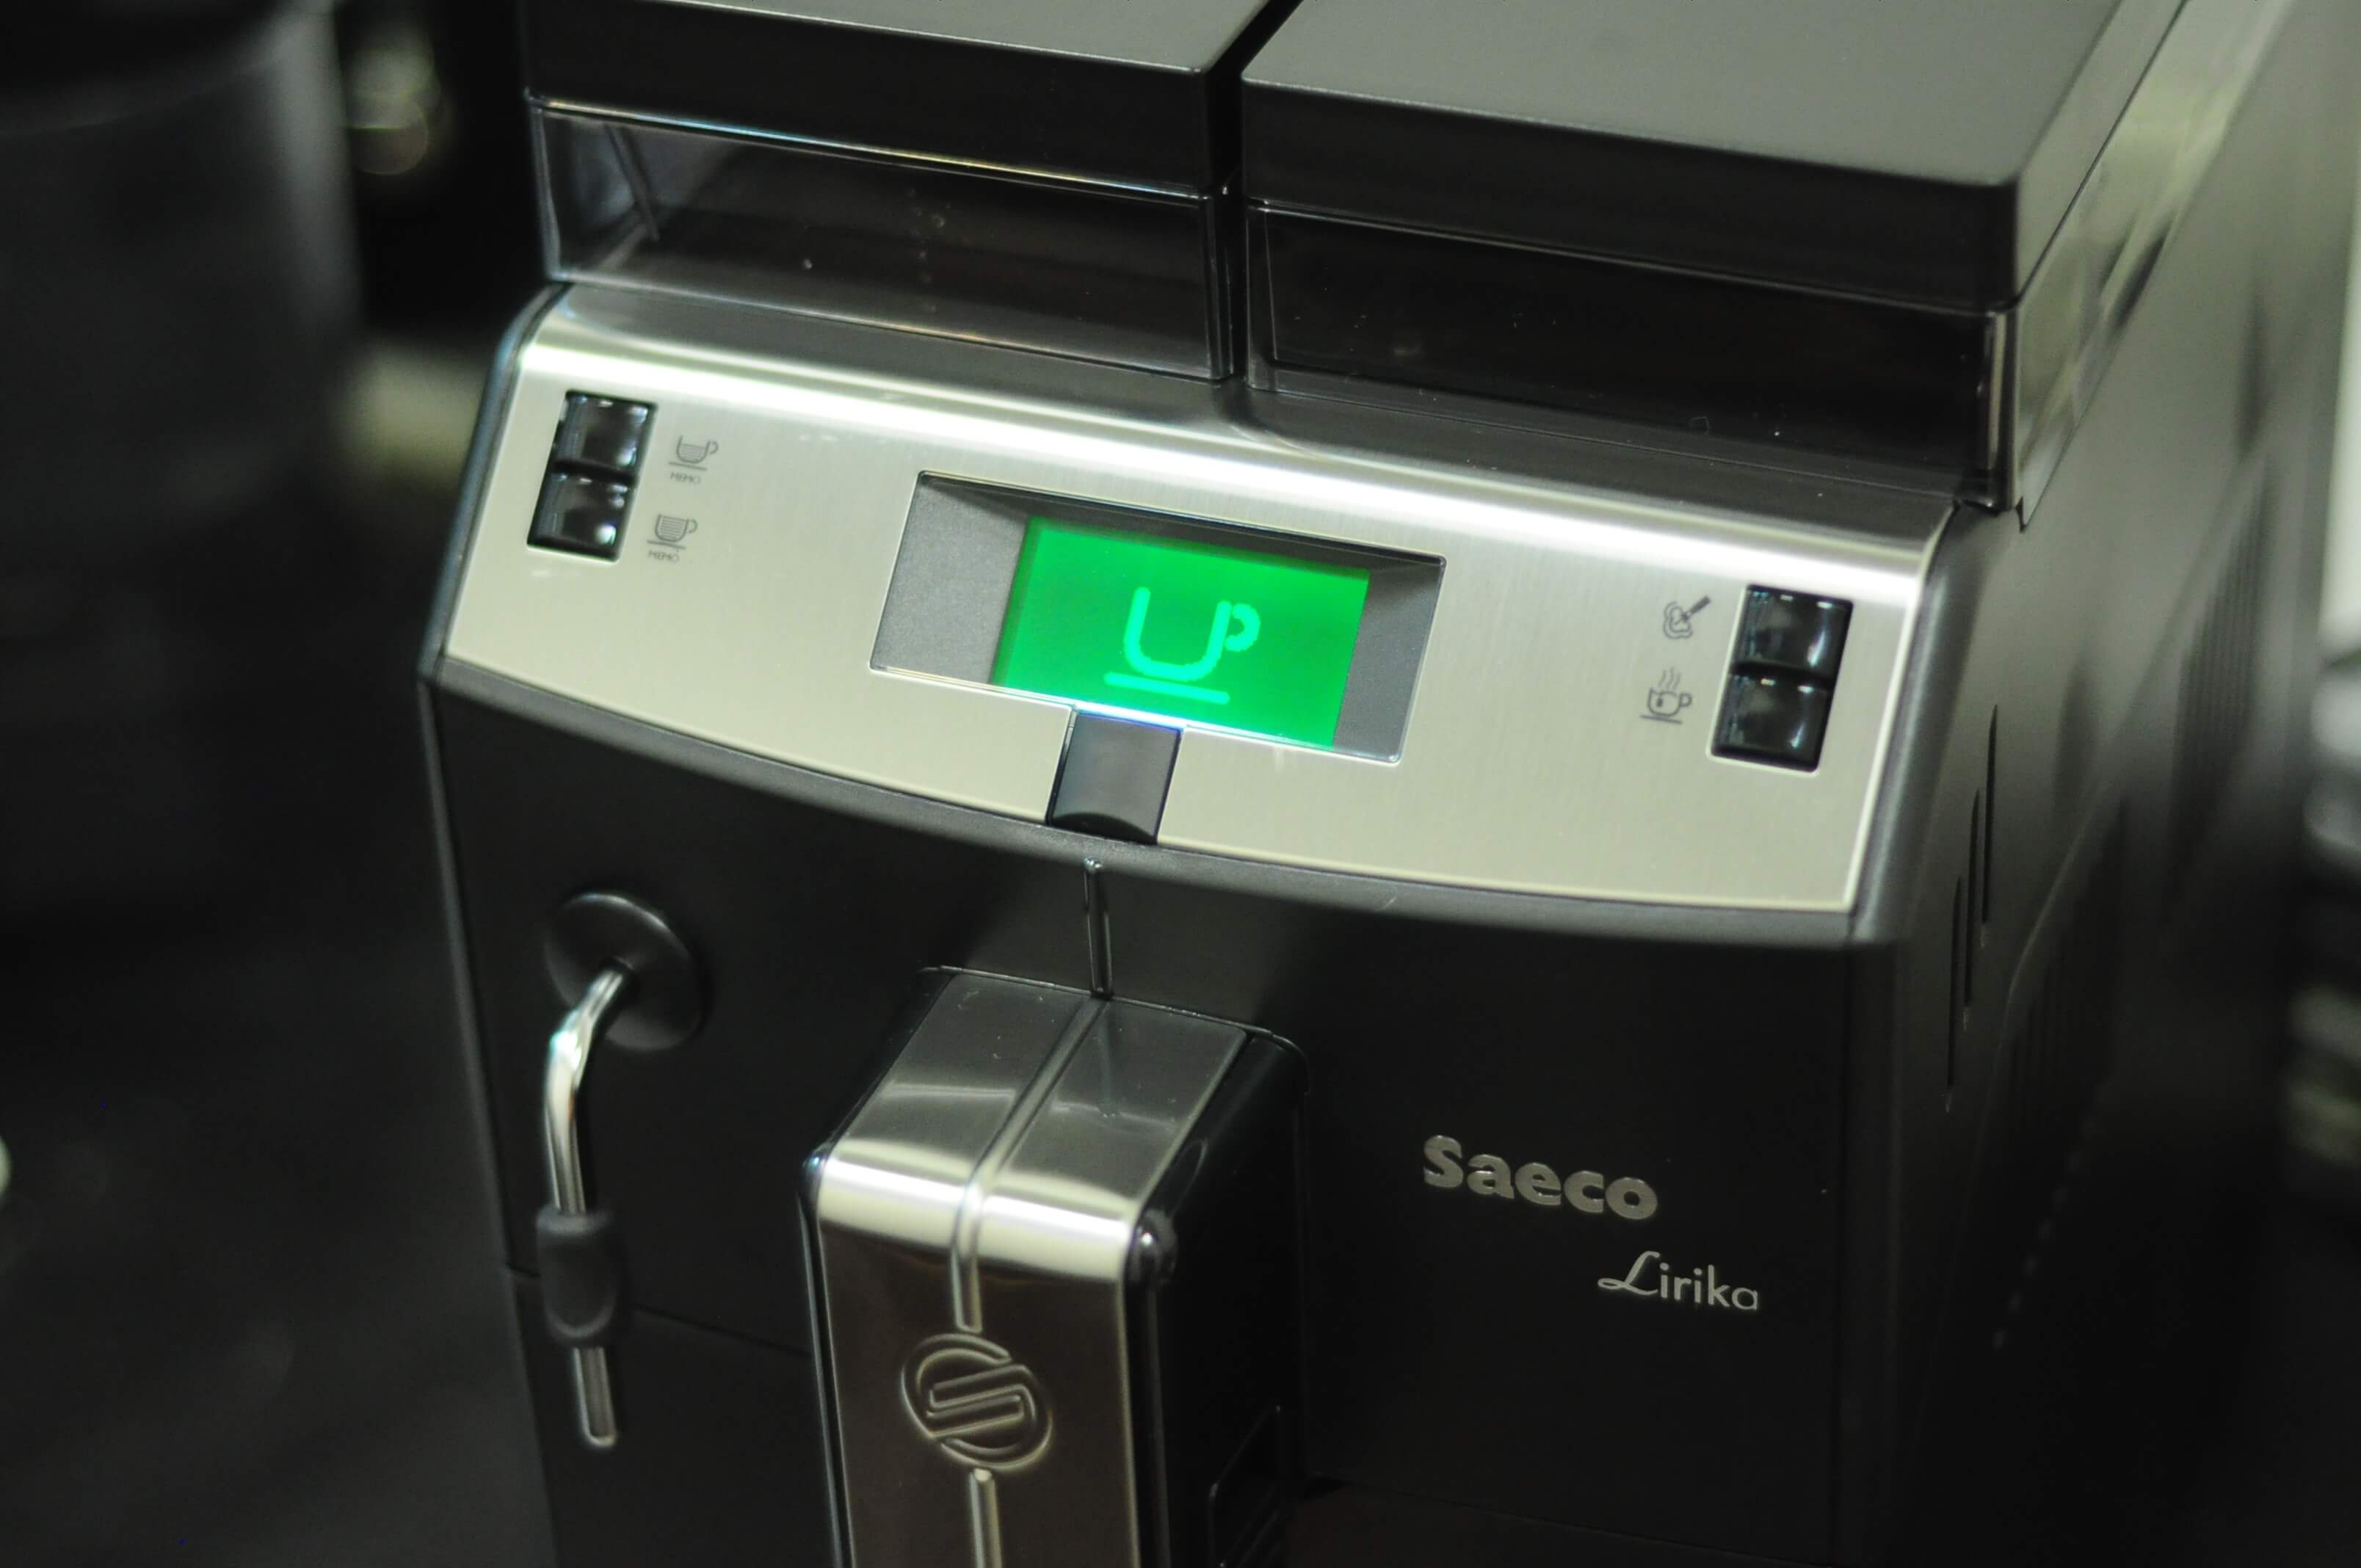 RI9840 Lirika Black Saeco全自動咖啡機 圖像化螢幕顯示 適合小型辦公室